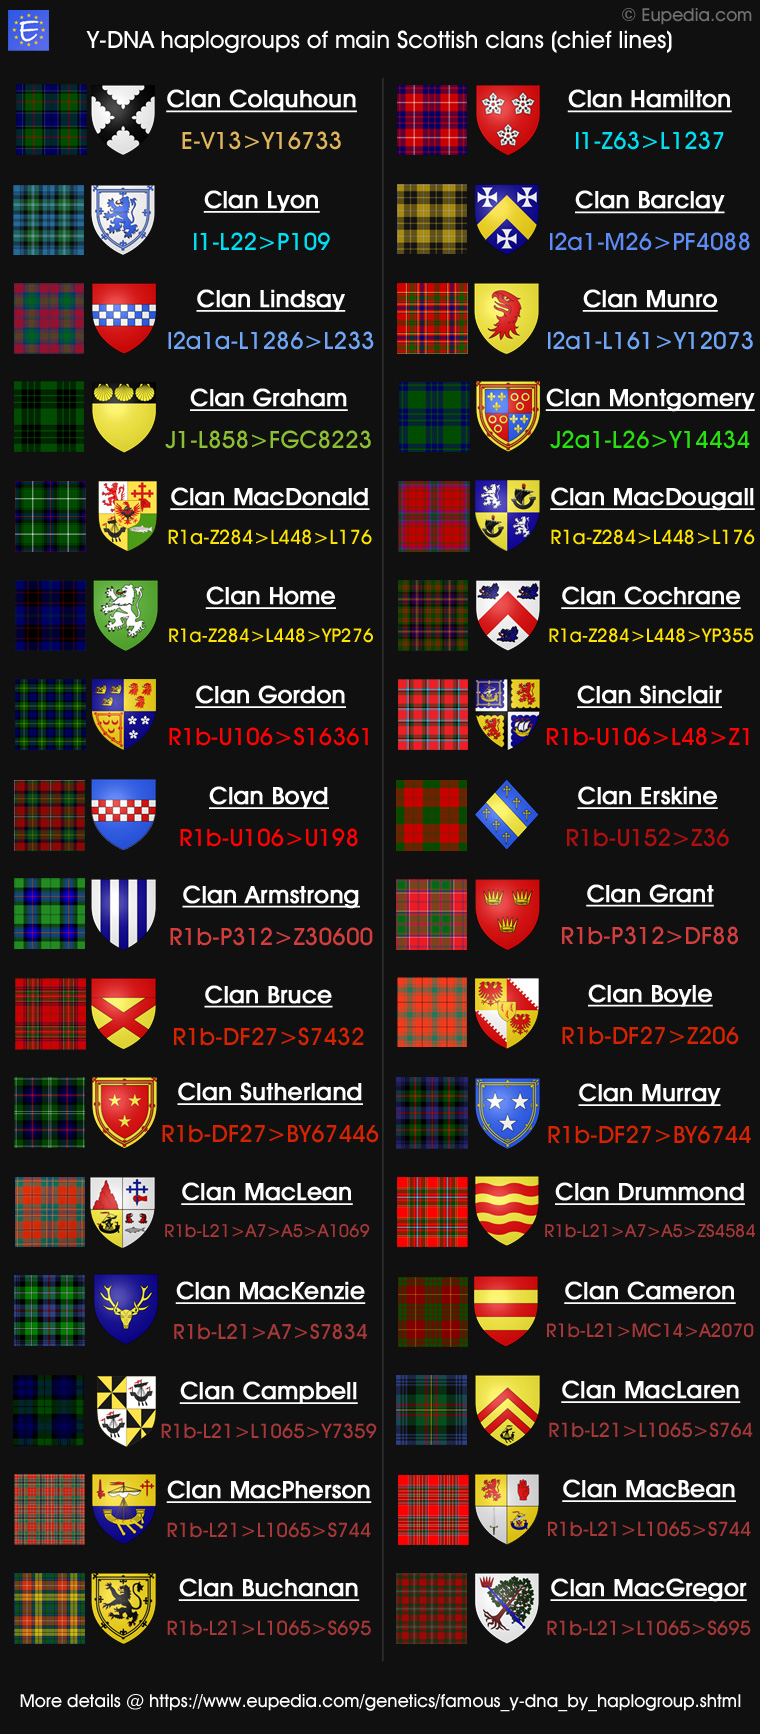 Y-DNA haplogroups of the main Scottish clans